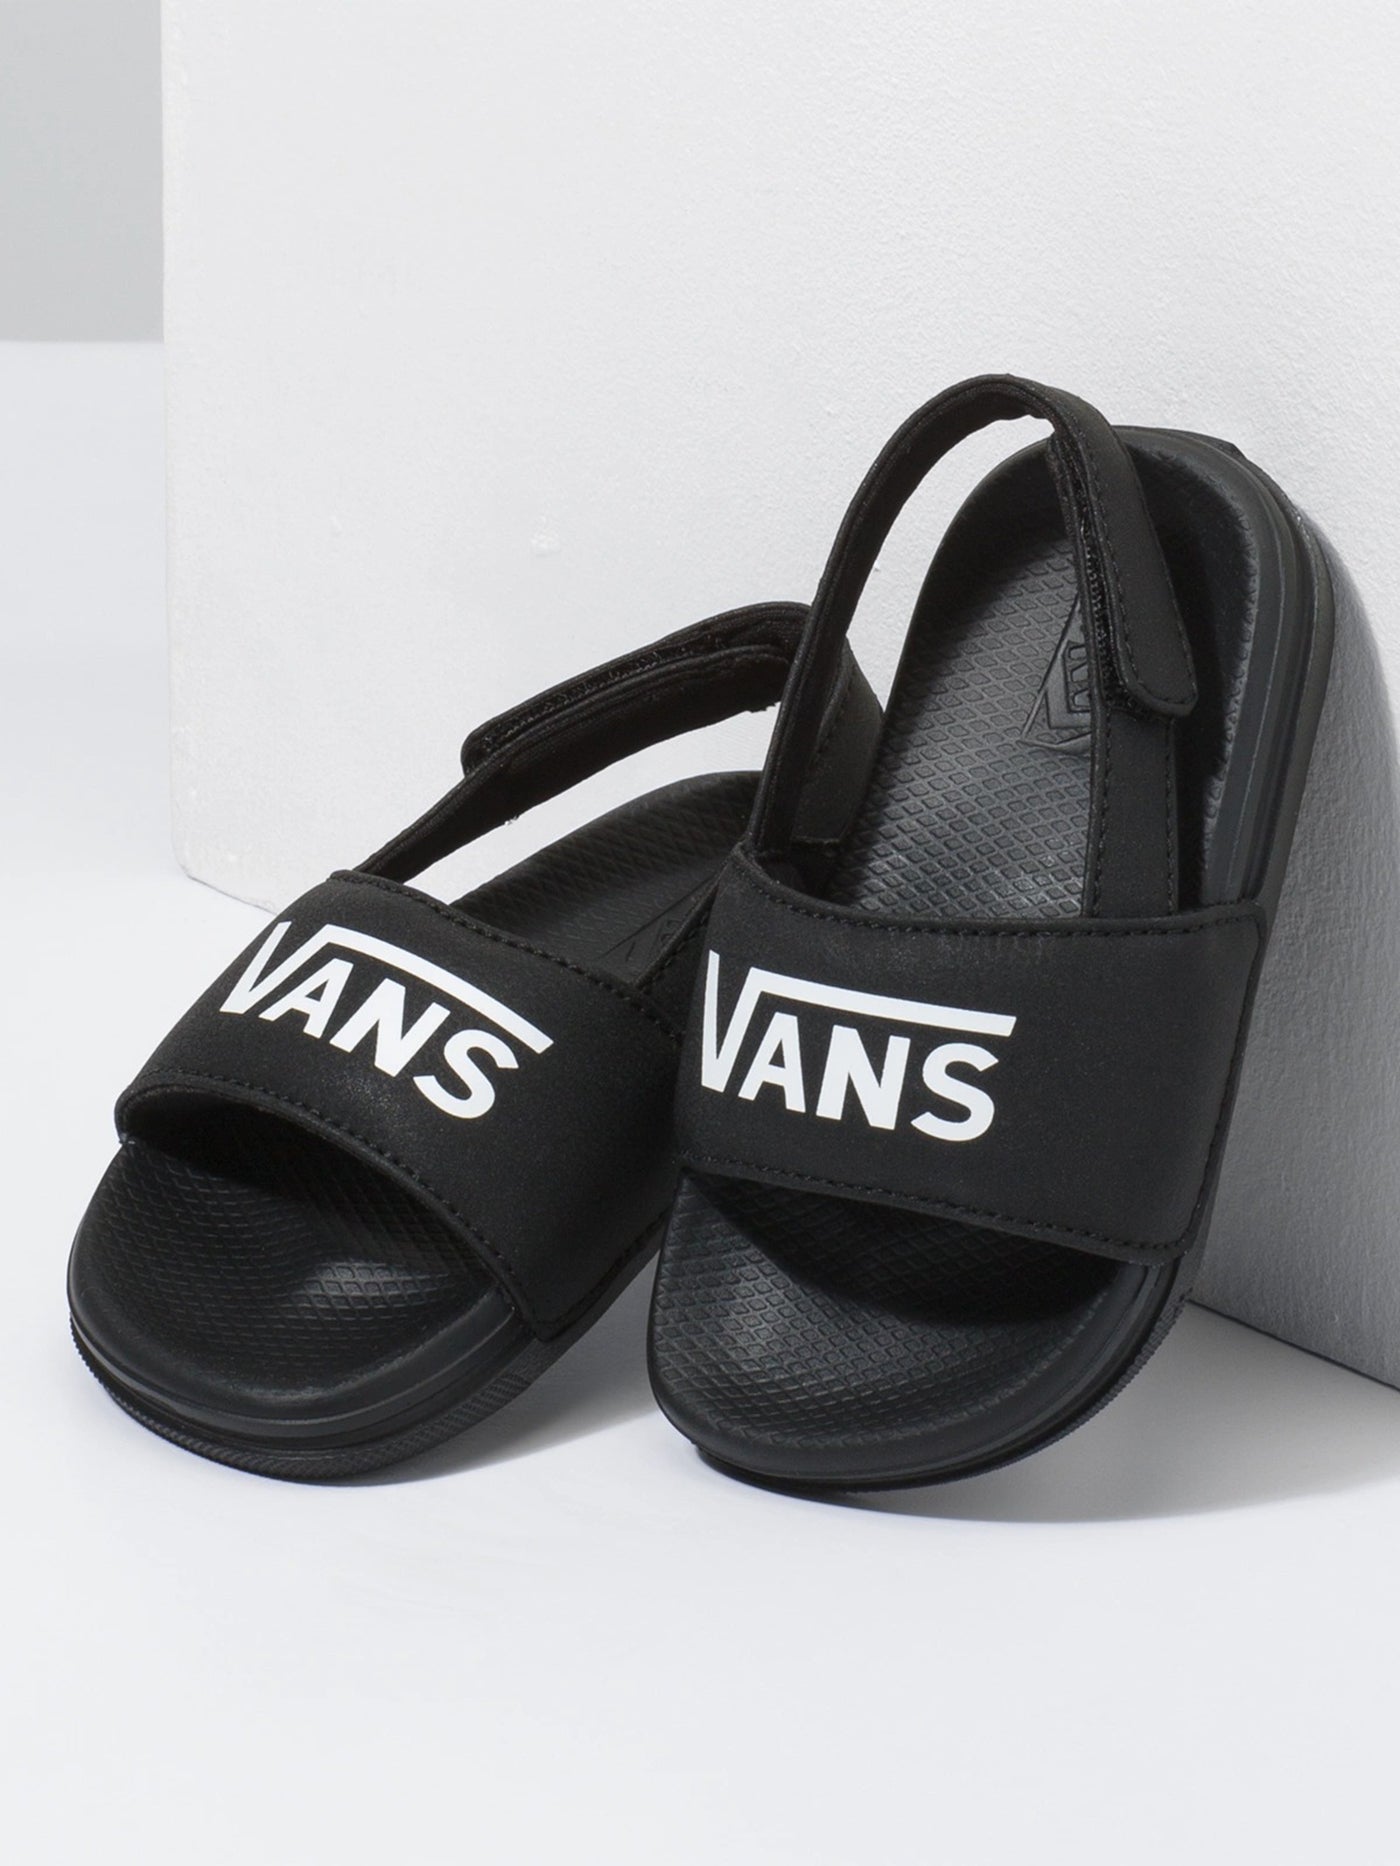 Vans La Costa Black/True White Sandals